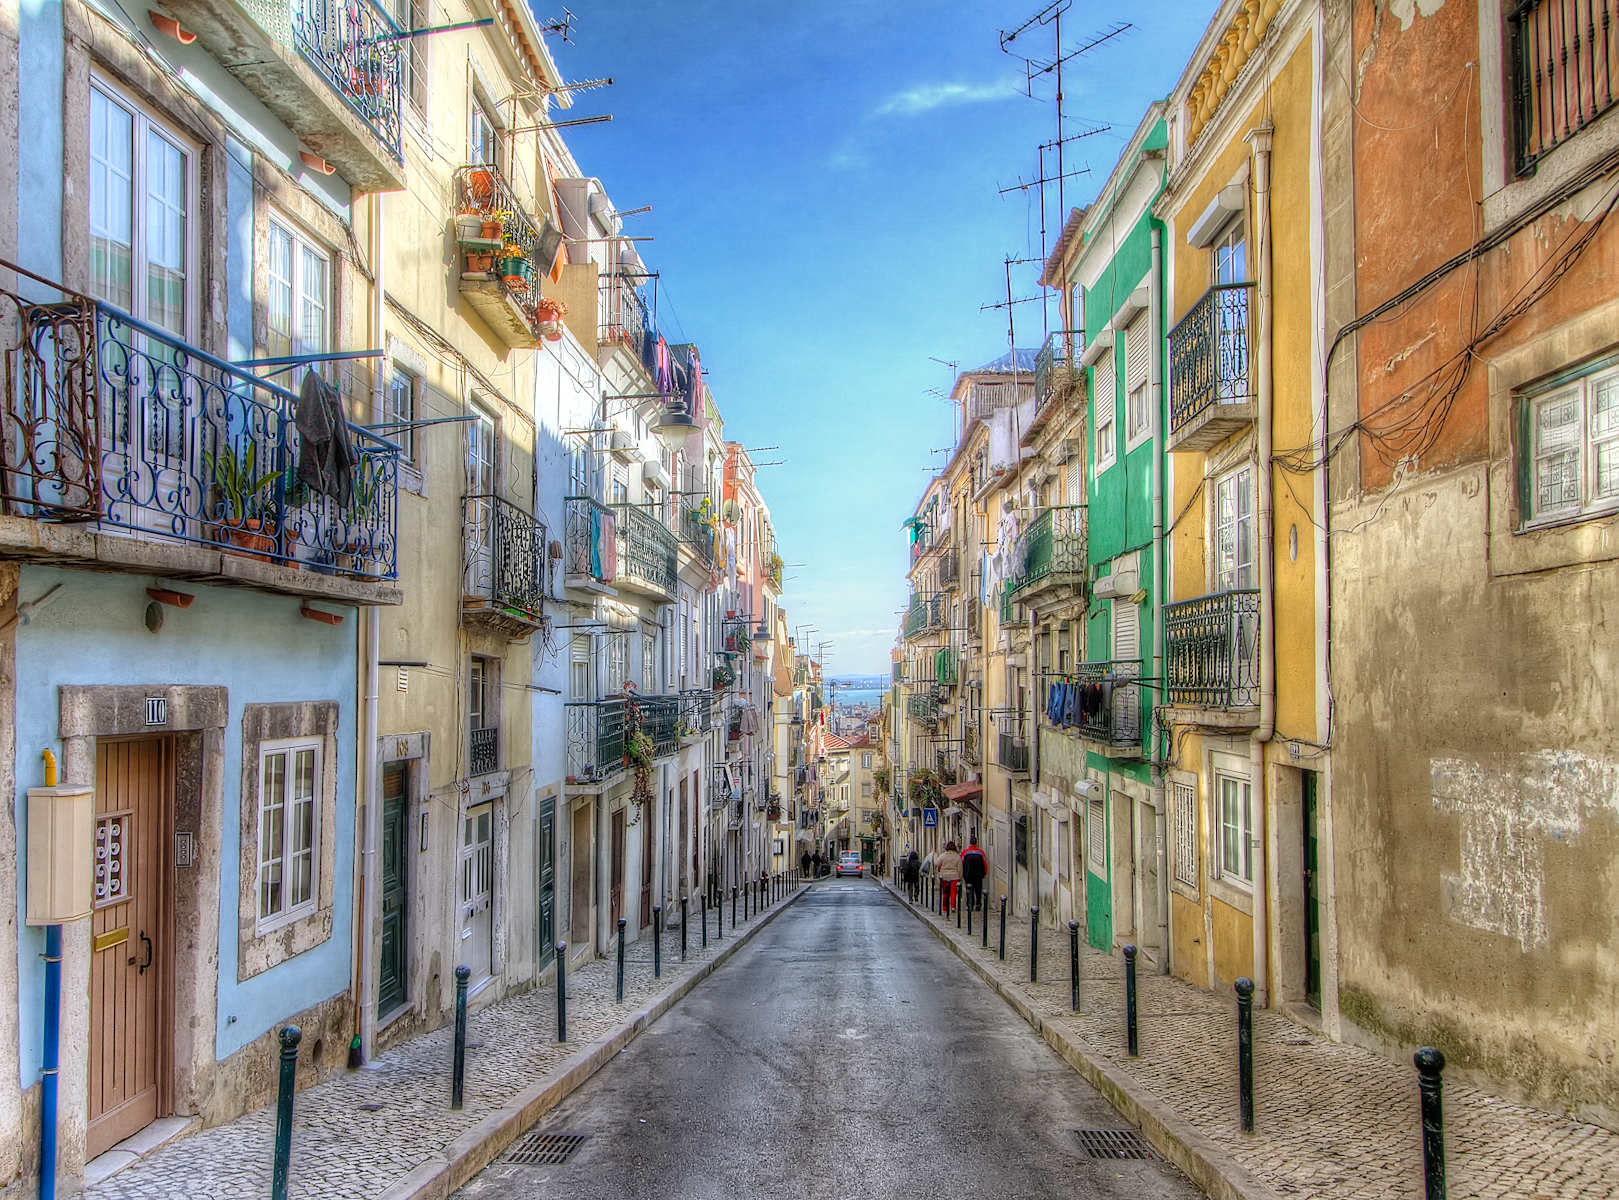 File:Lisbon Street, Portugal (8619812026).jpg - Wikimedia Commons